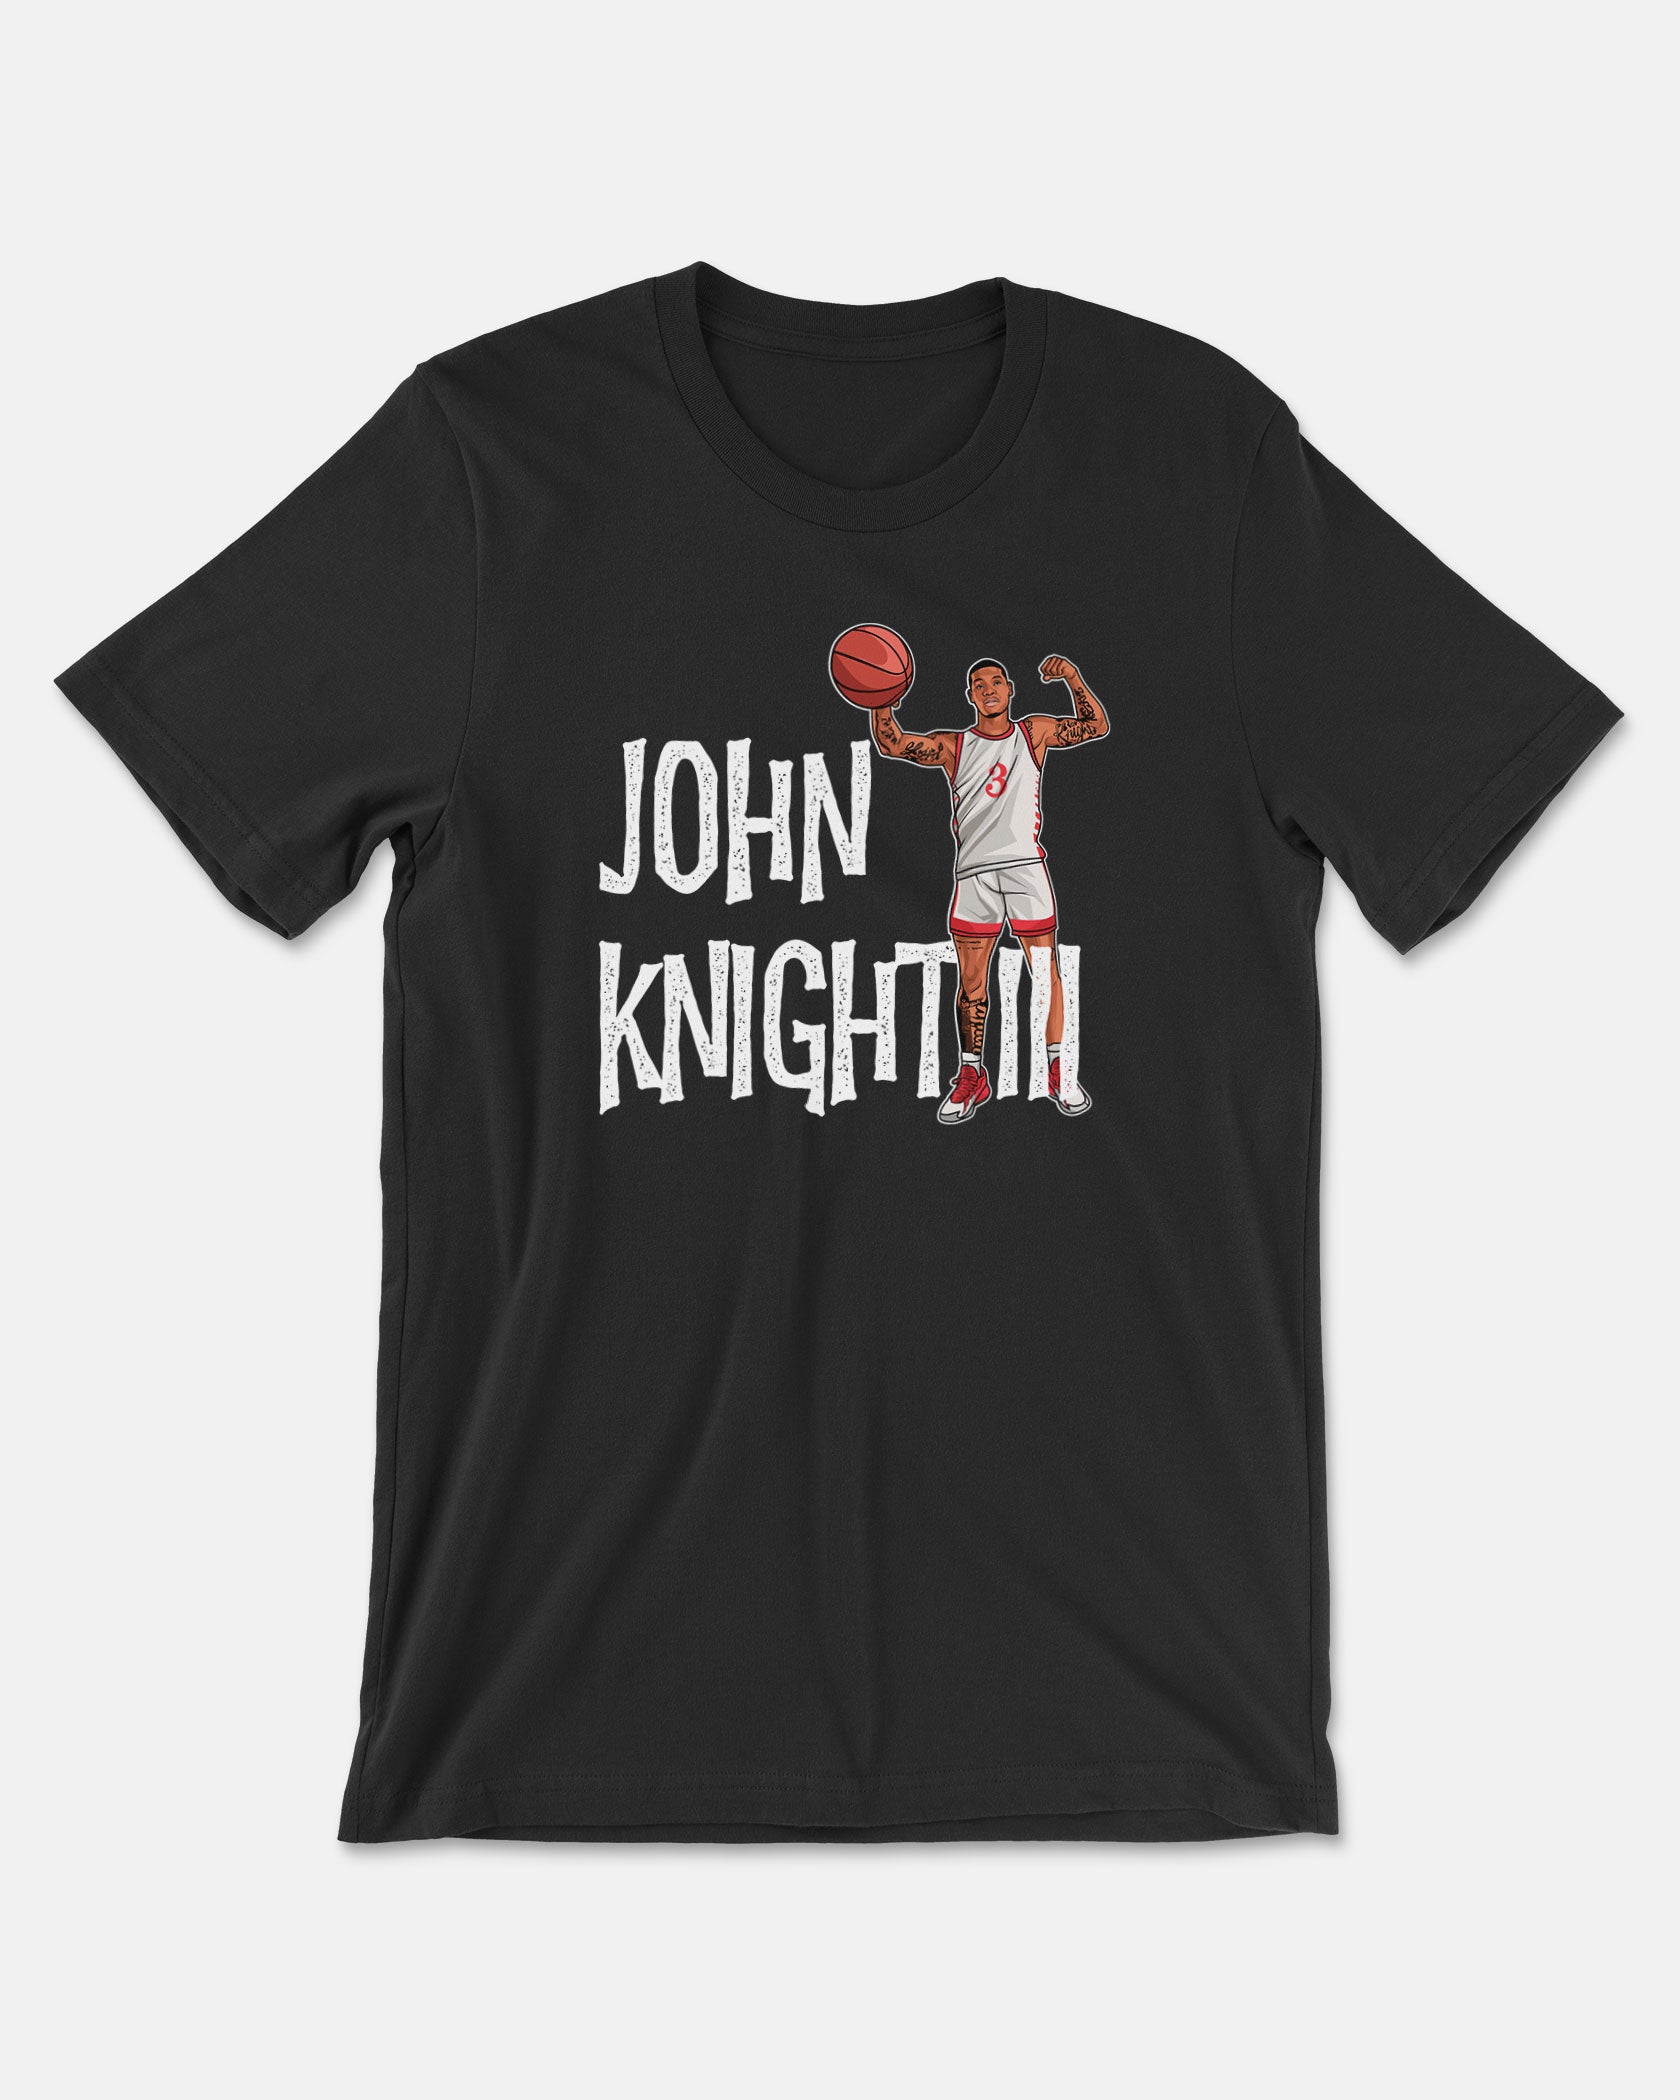 John Knight III Shirt 002